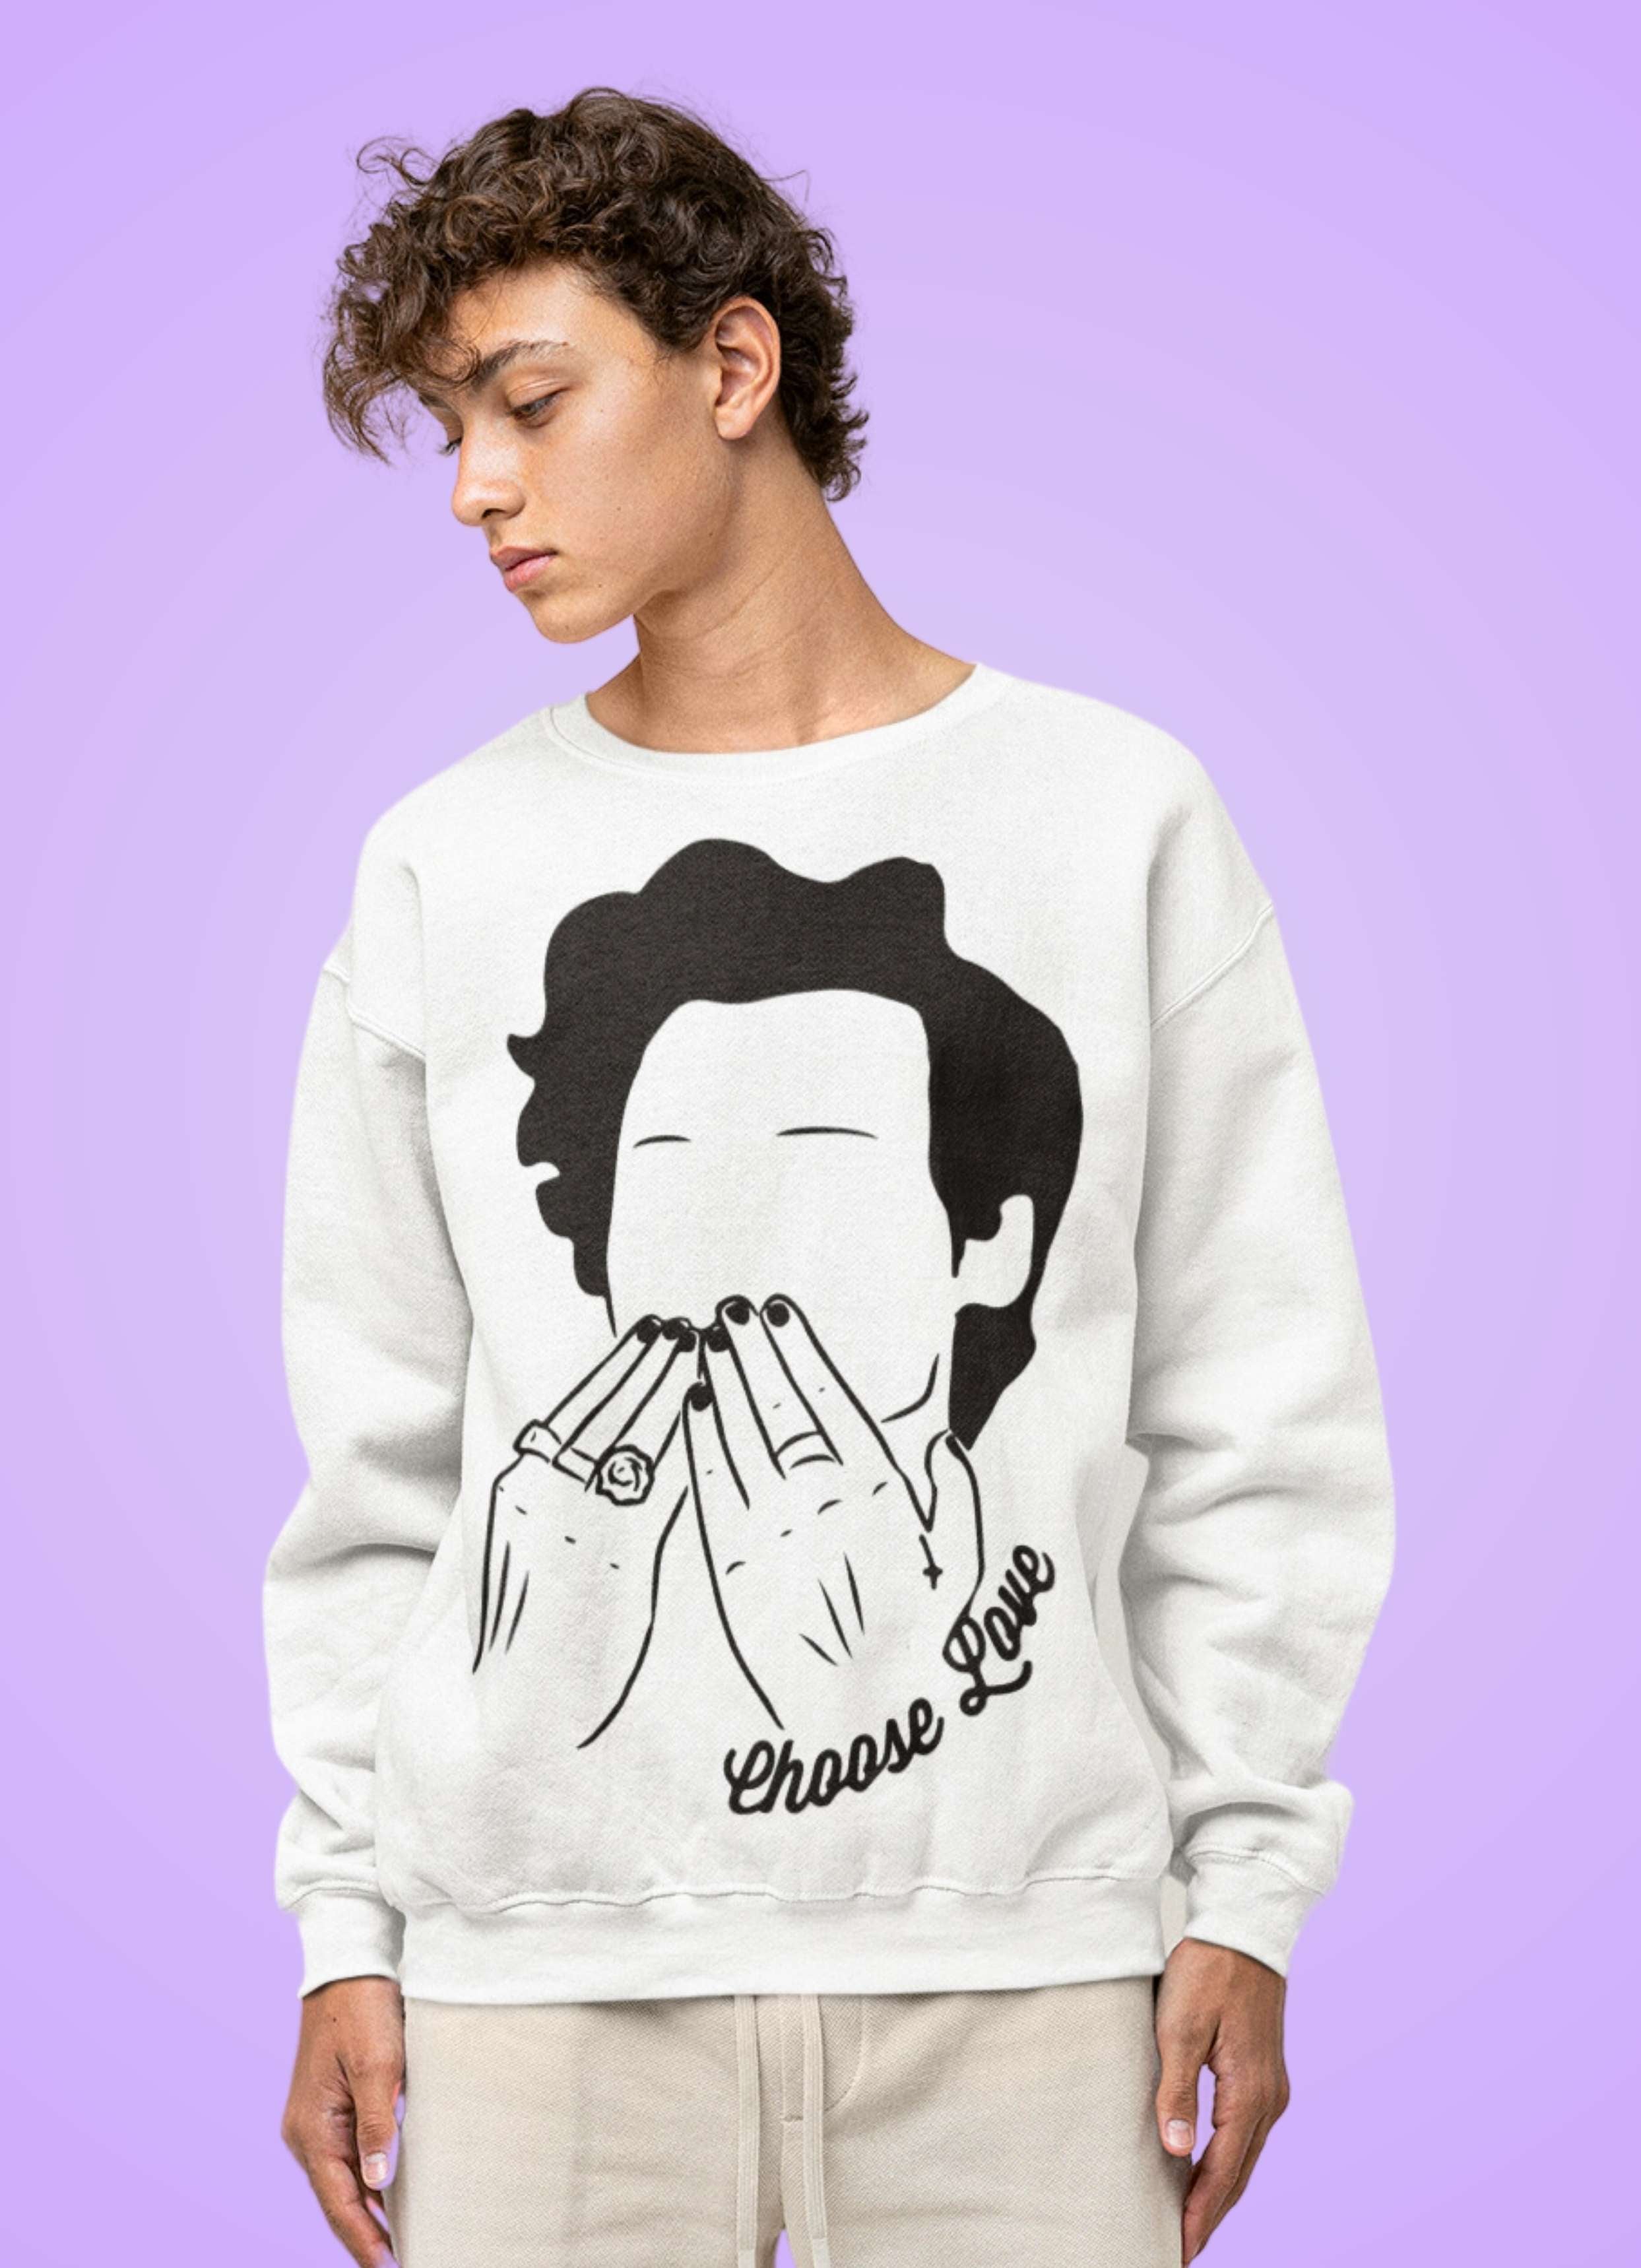 Harry Styles Choose-Love Unisex Sweatshirt